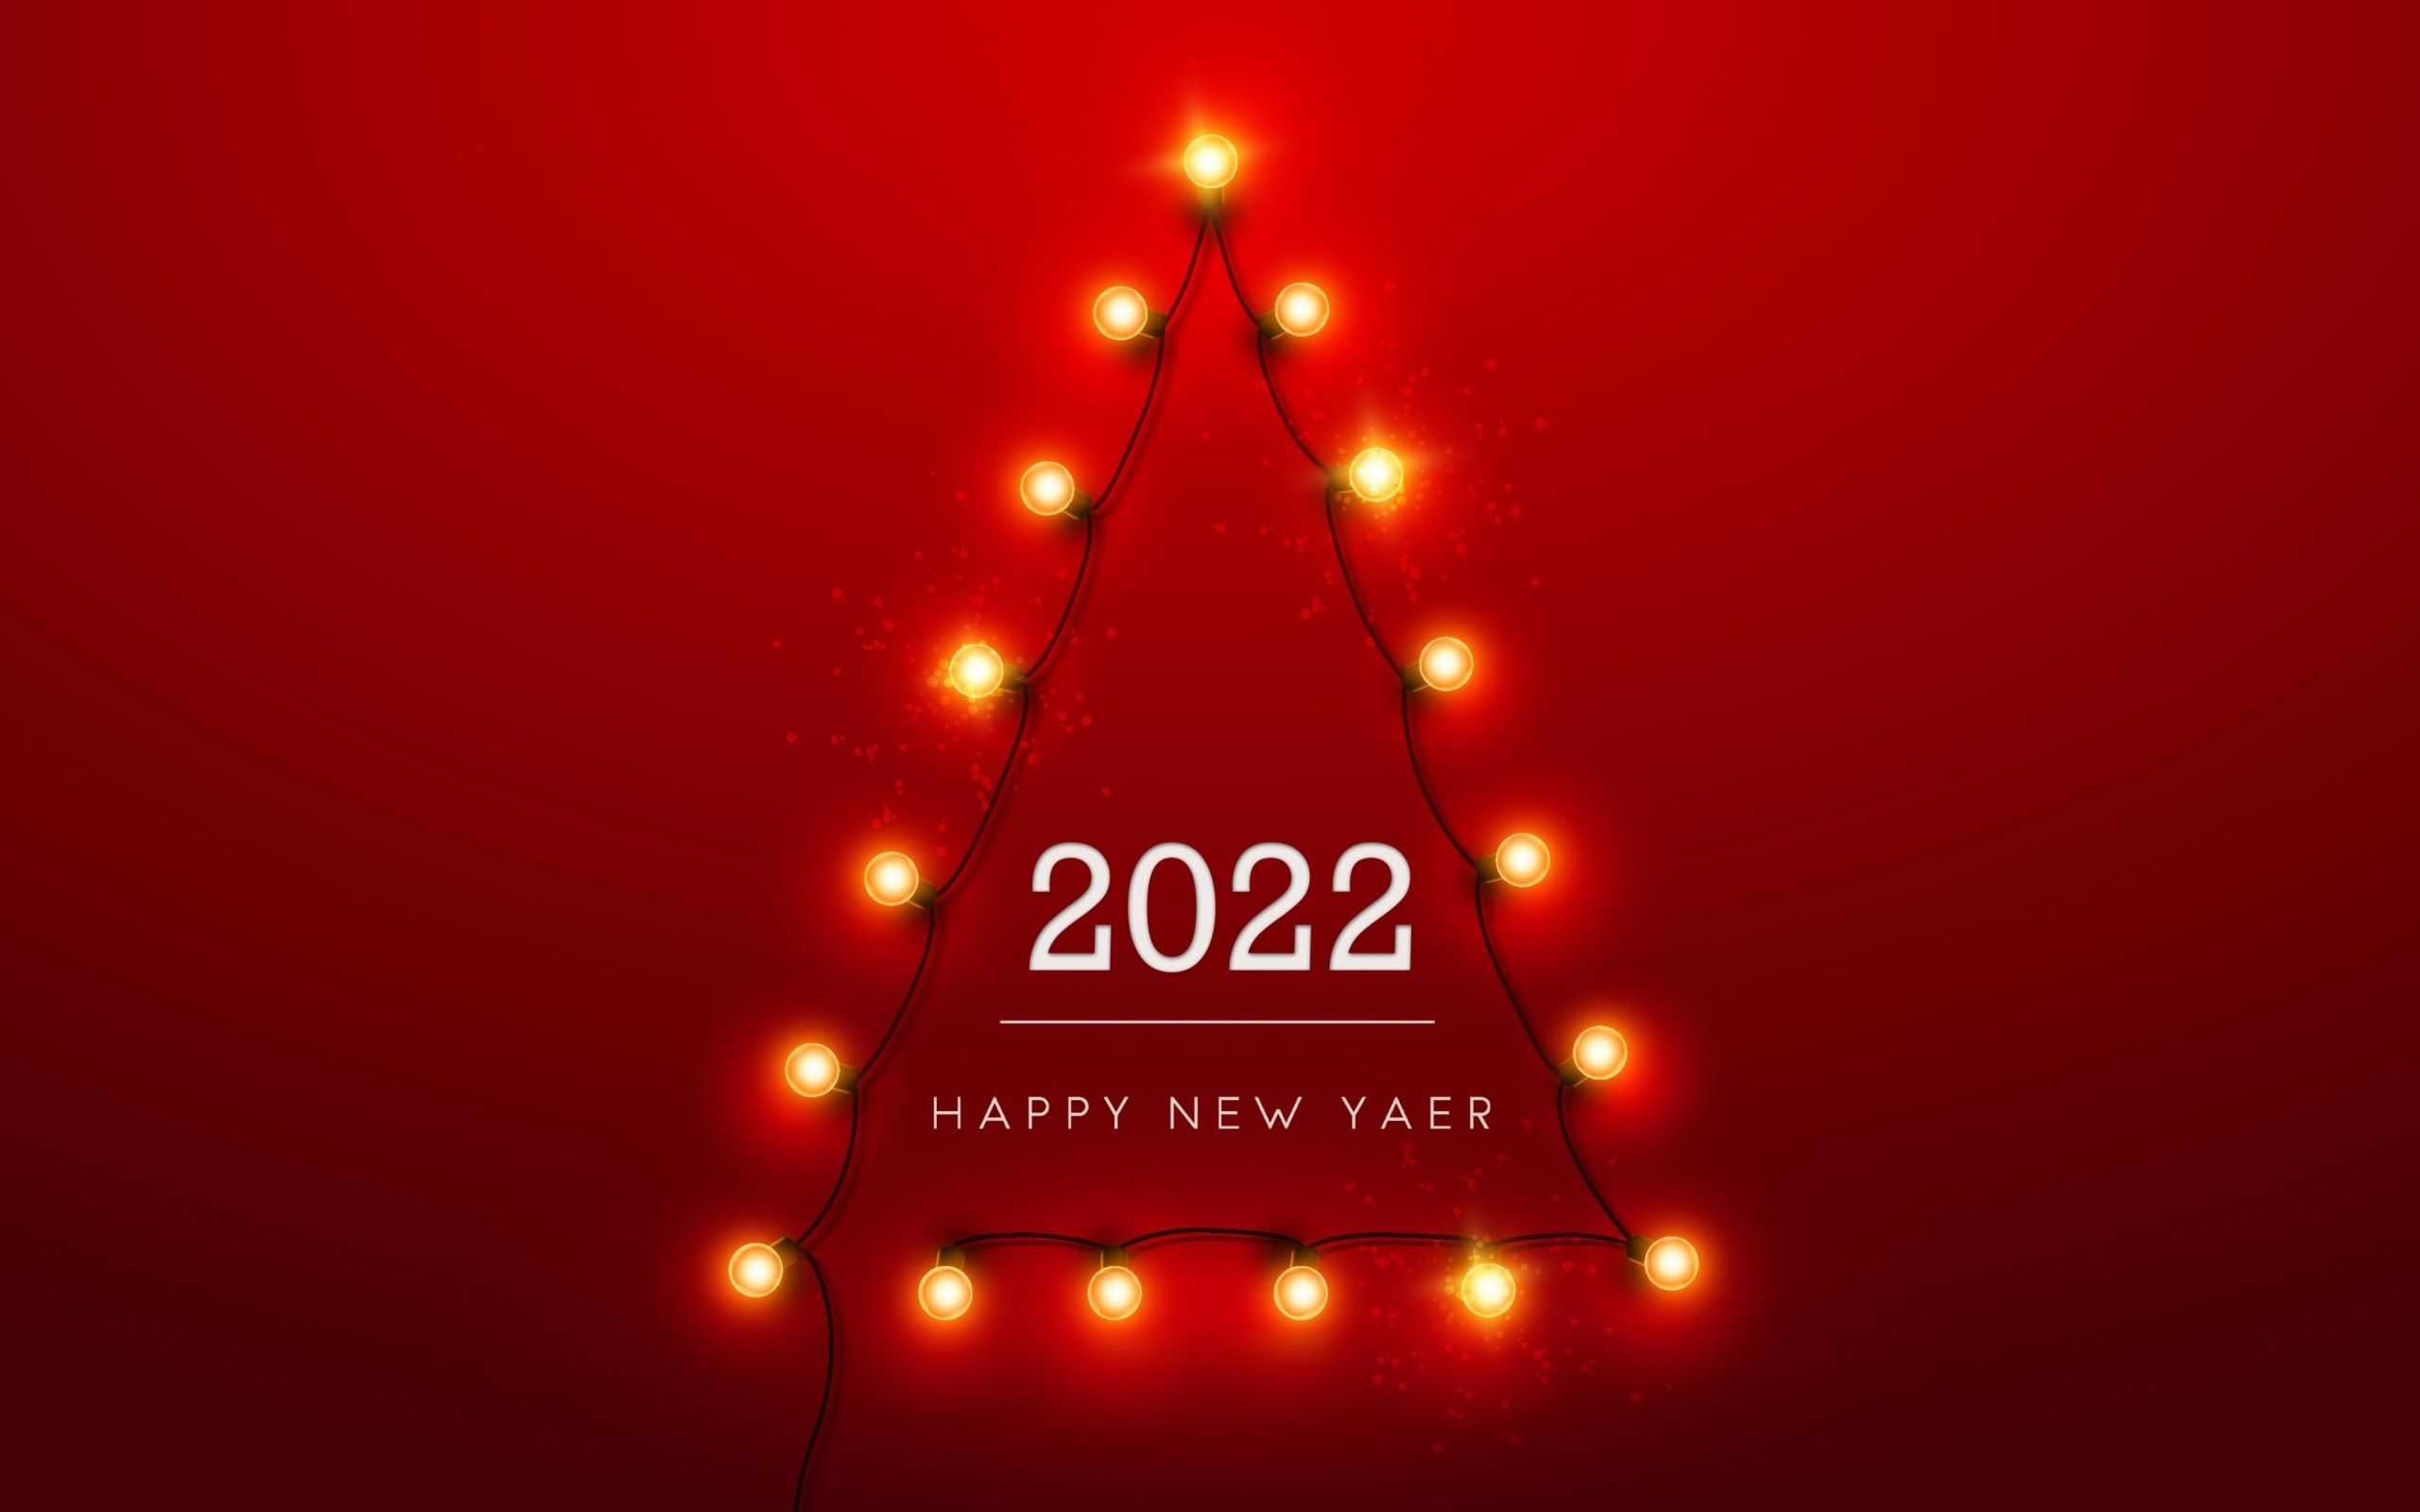 Happy New Year 2022 wallpaper 2560x1600